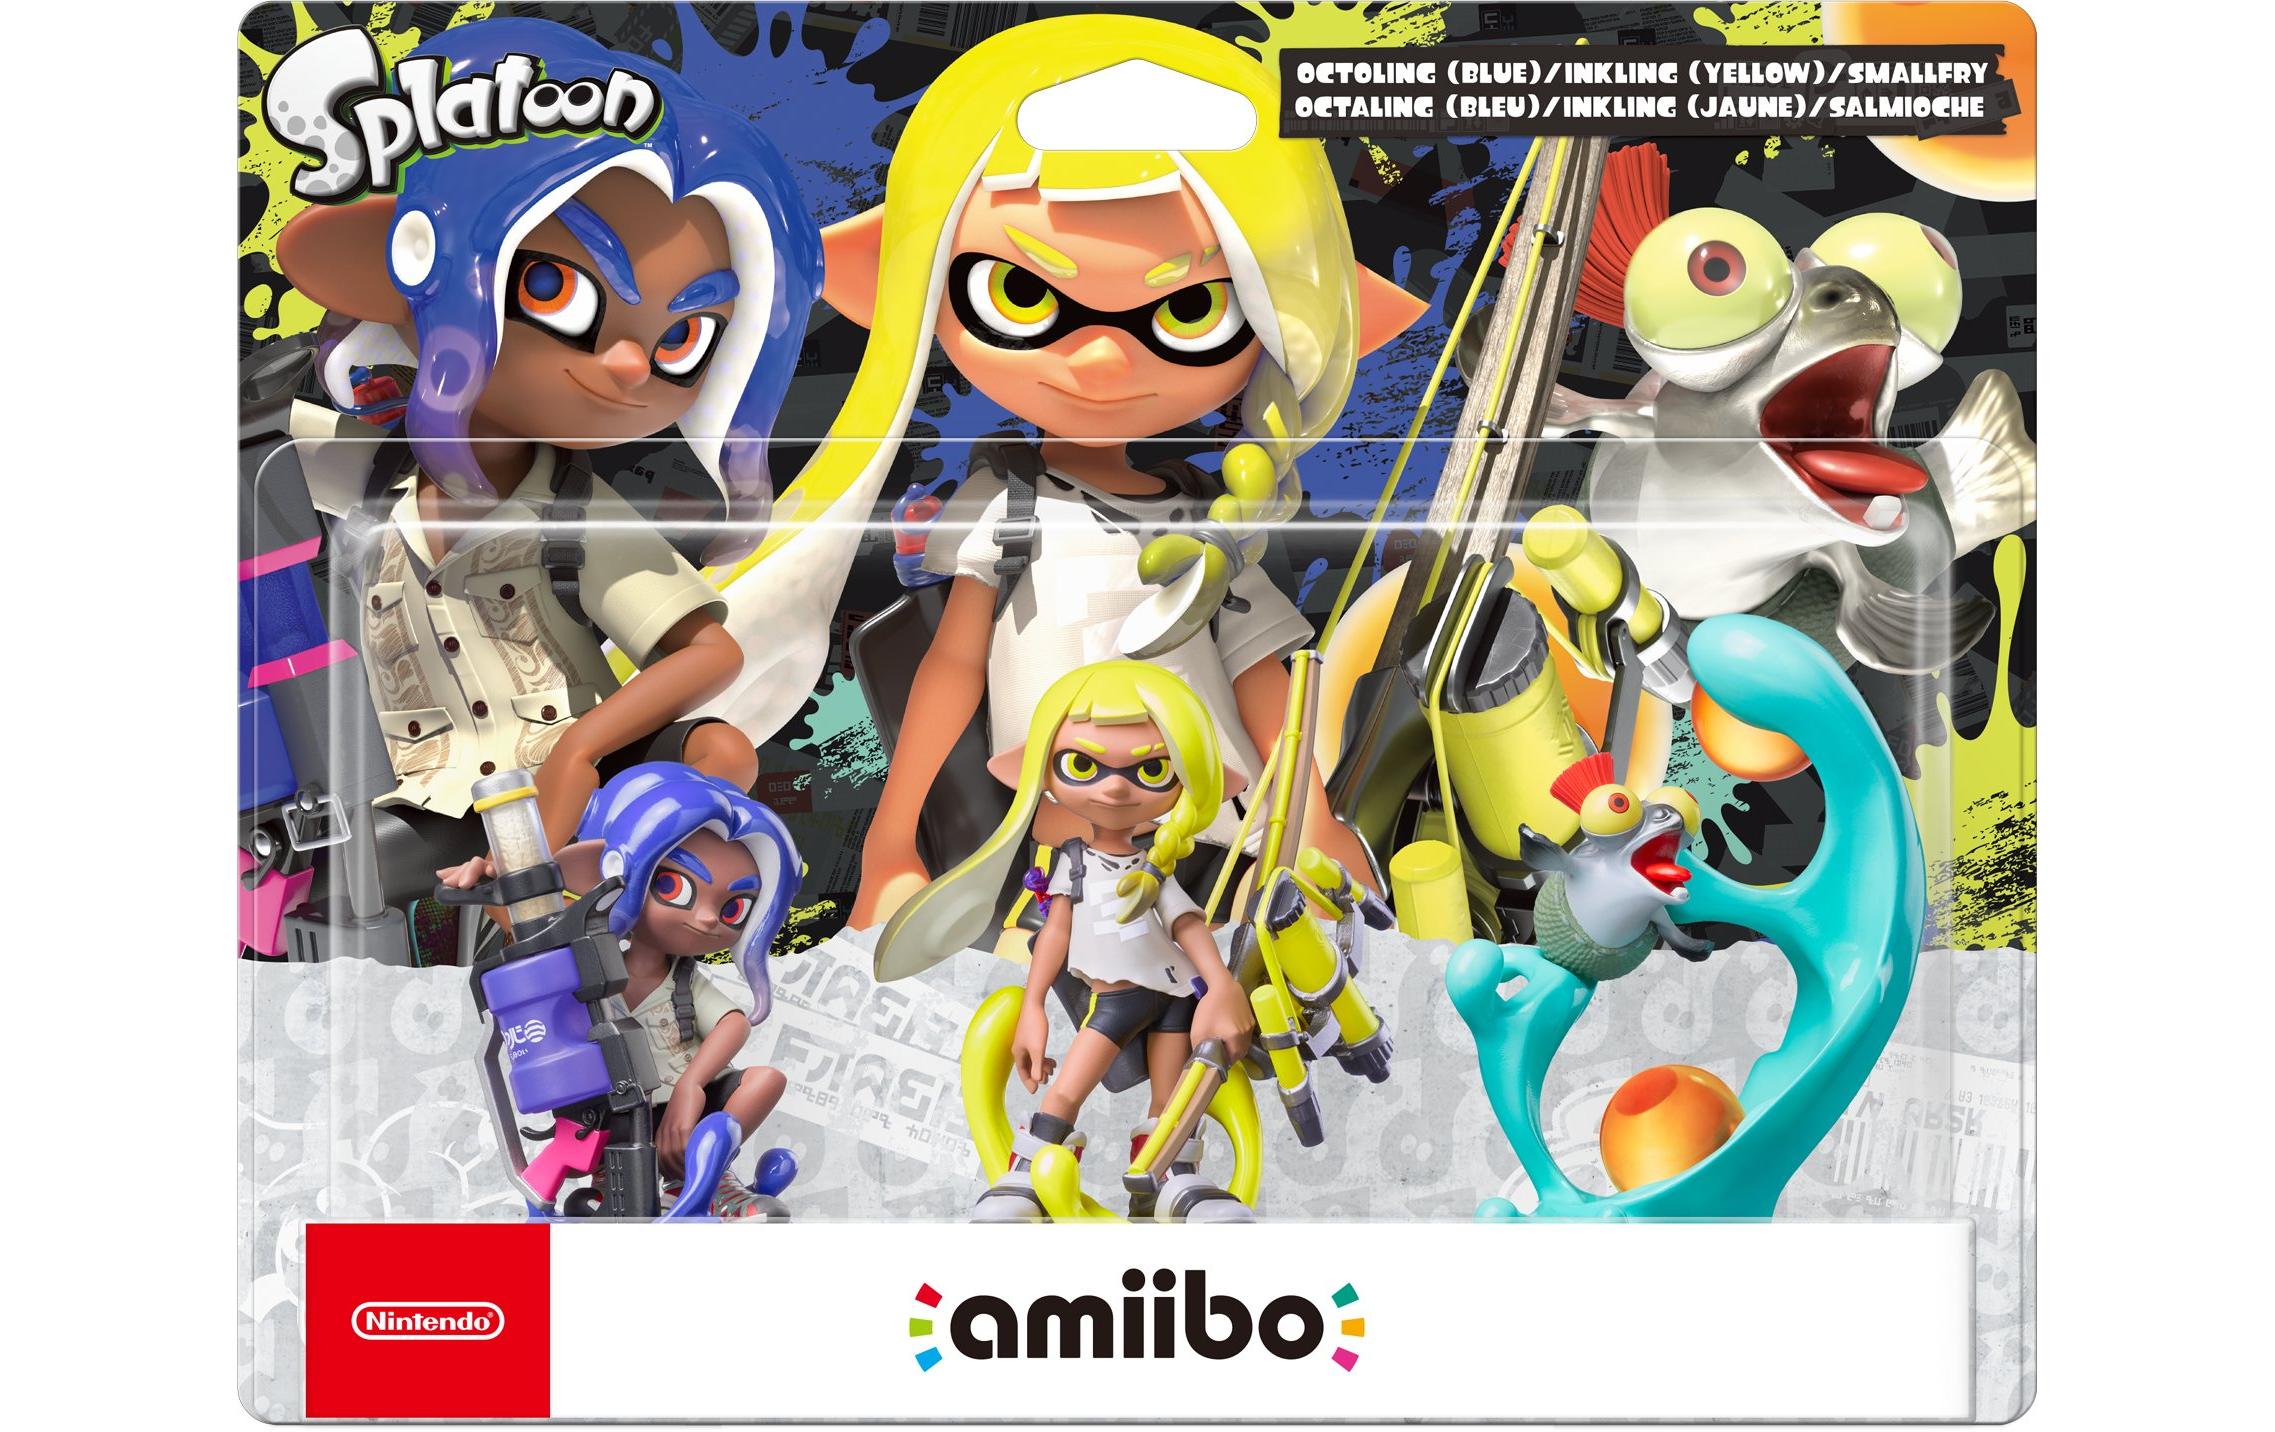 Nintendo amiibo Splatoon – Octoling Blue, Inkling Yellow, Smallfry